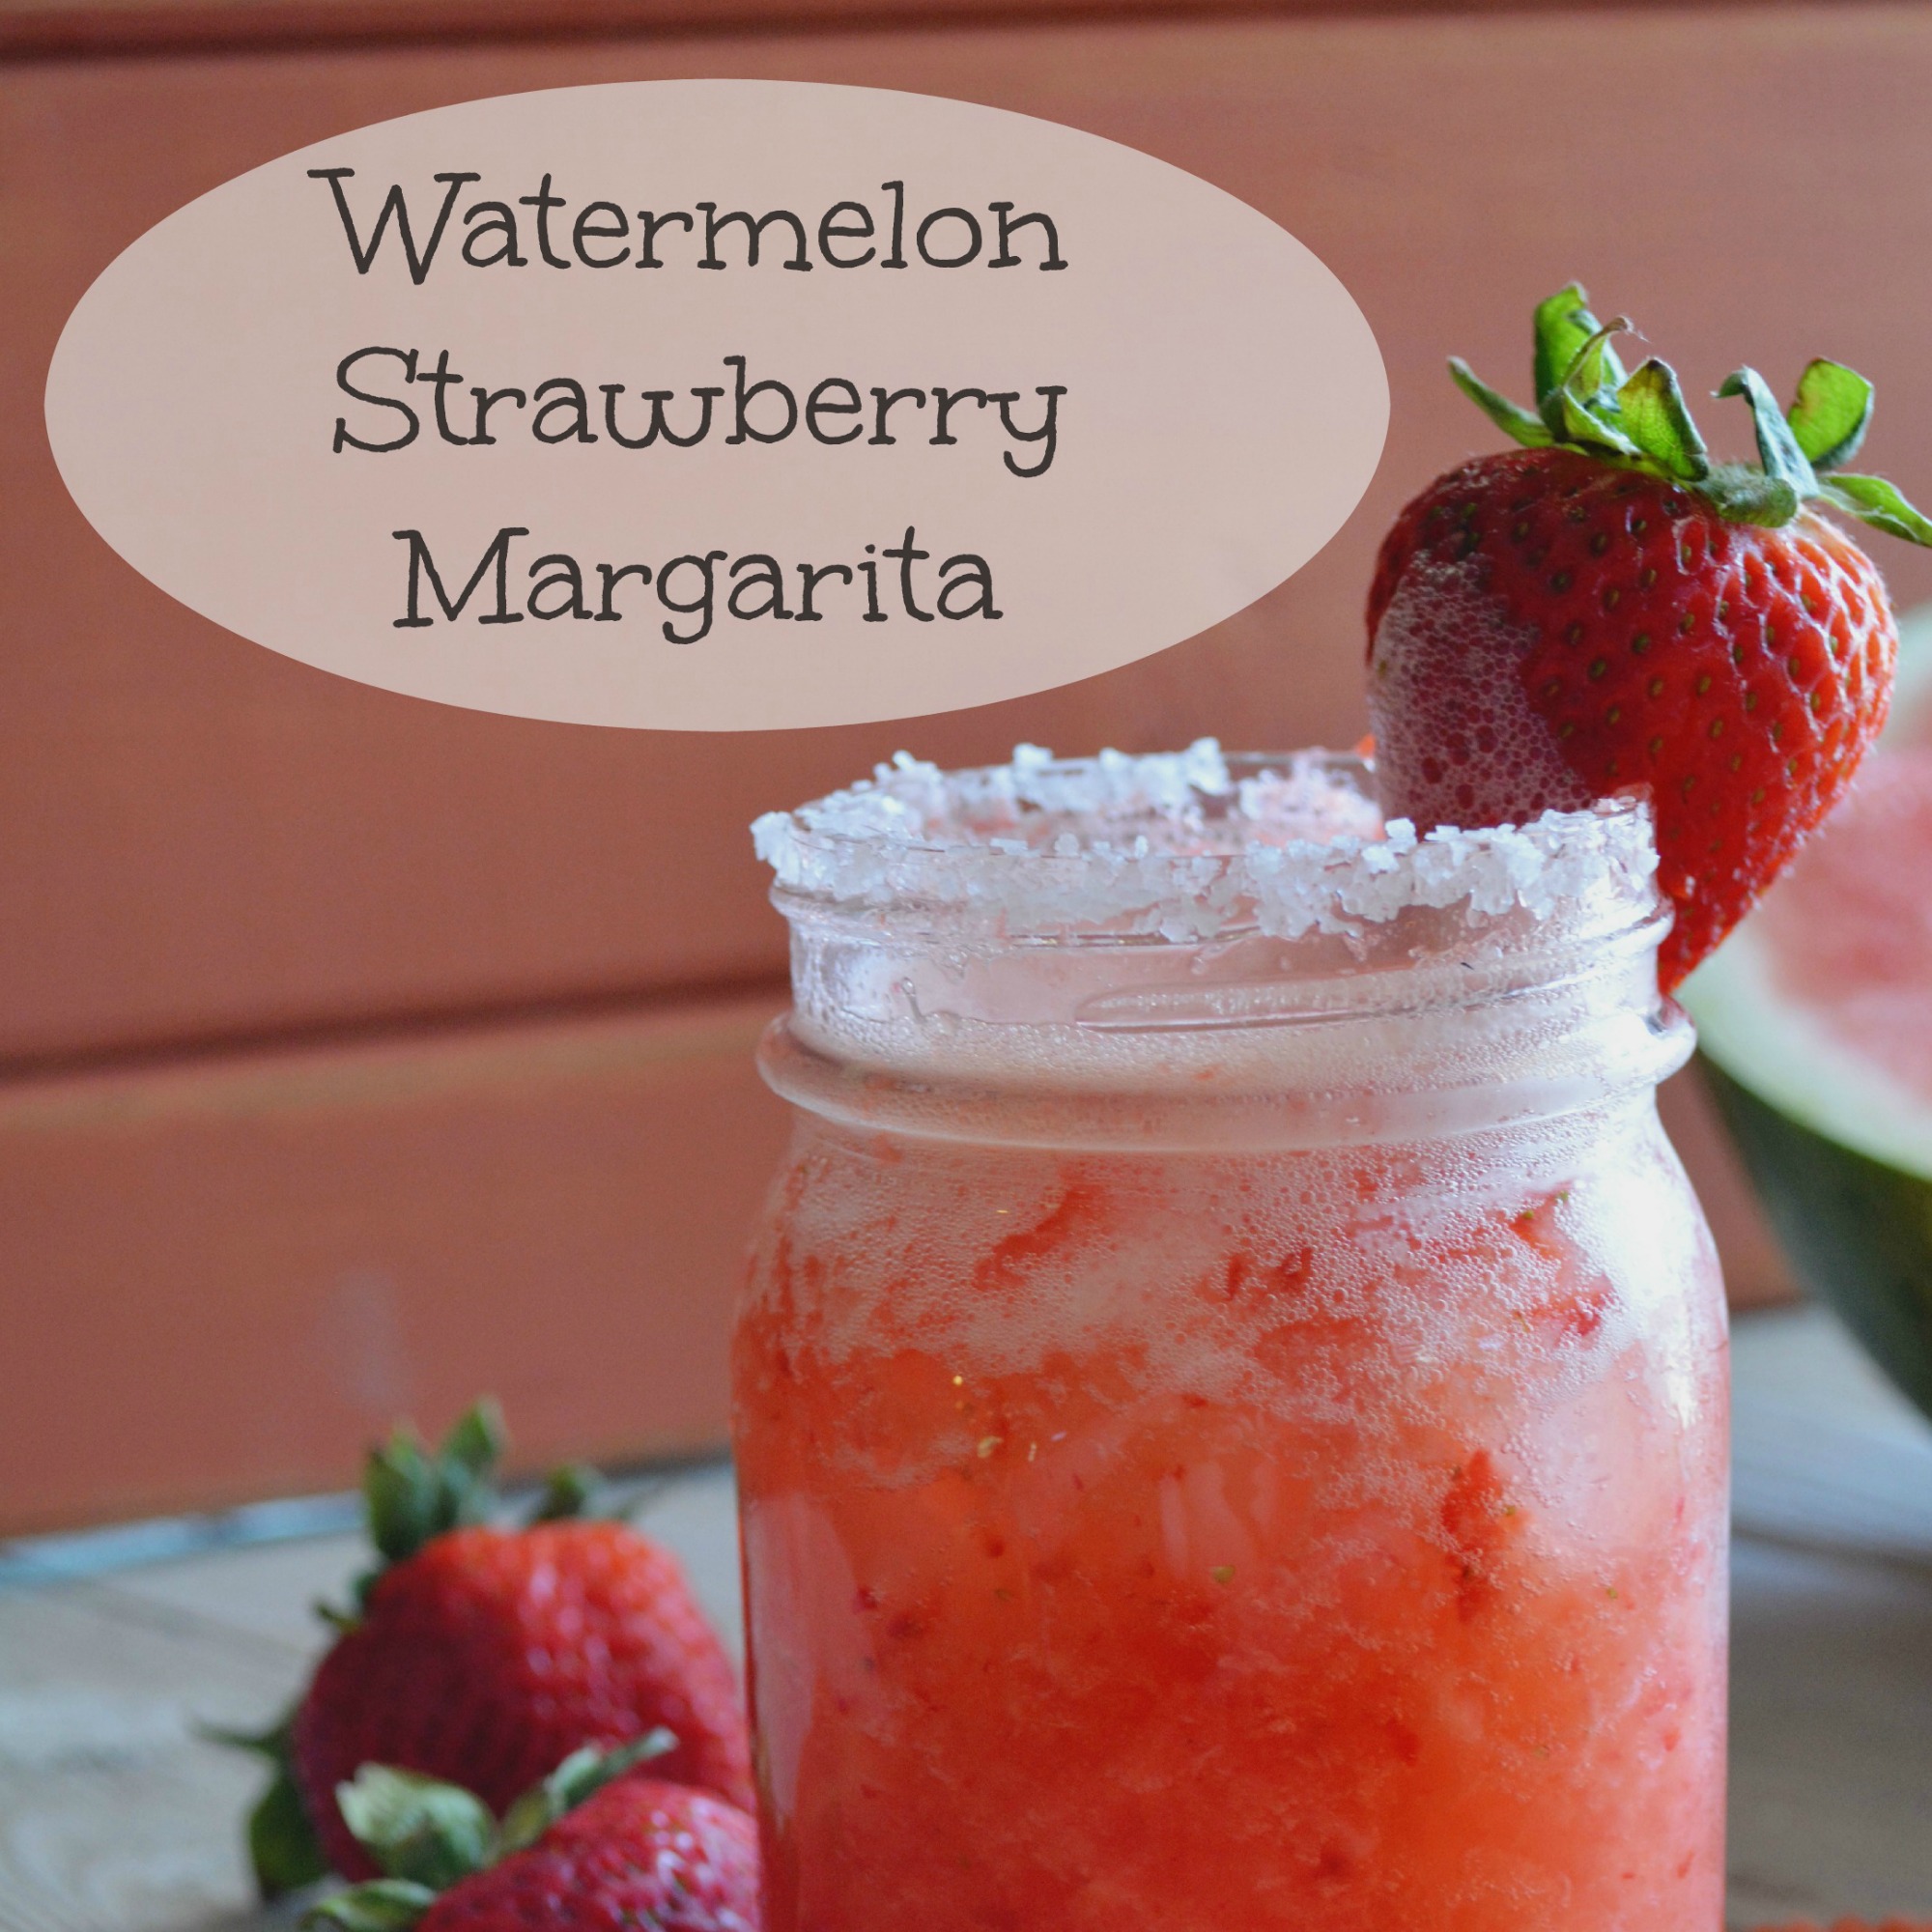 Watermelon Strawberry Margarita - Angela Sue Garvey